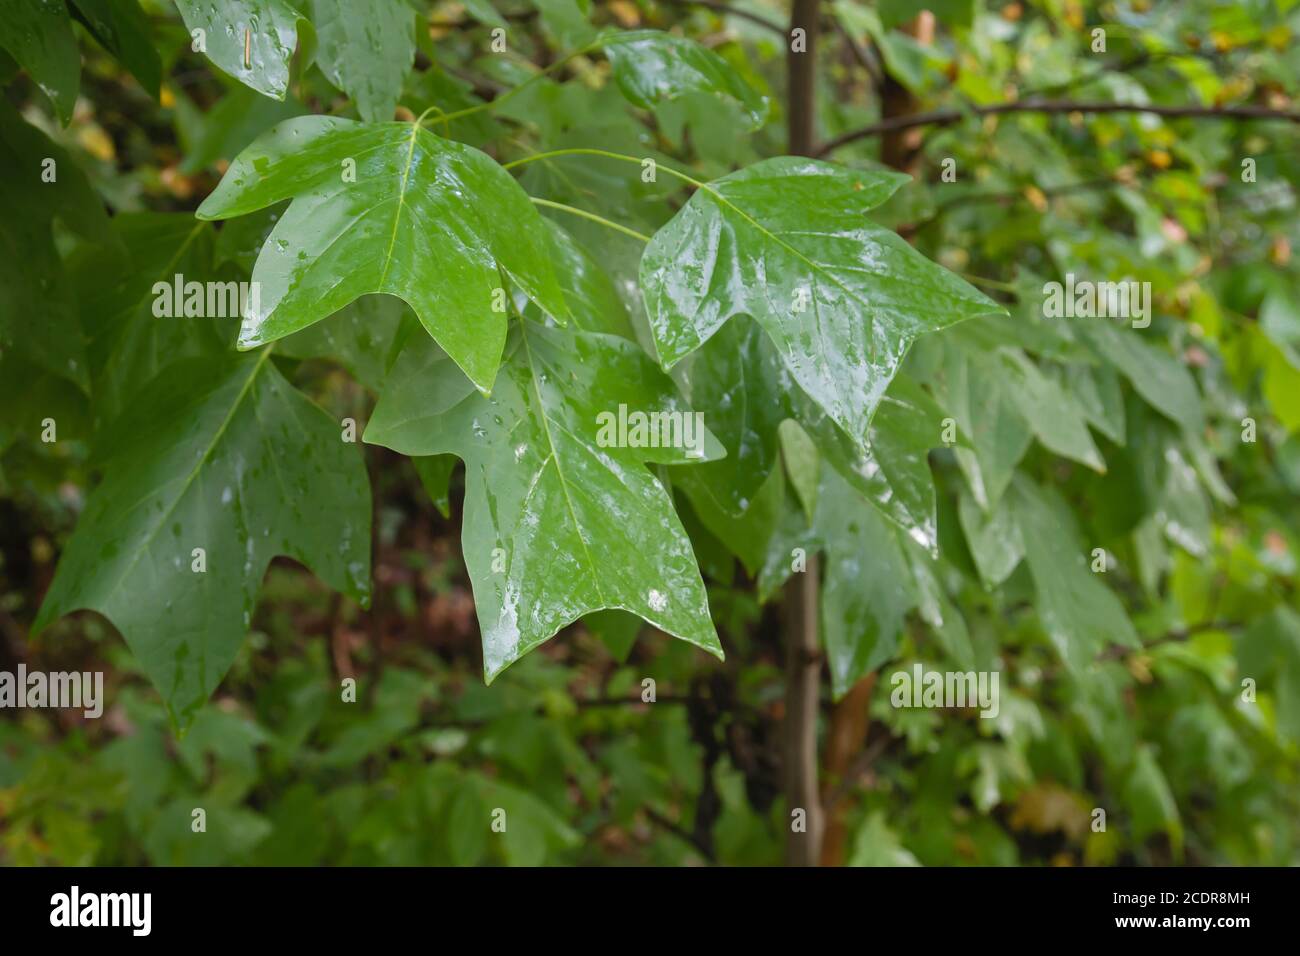 liriodendron tulipifera or tulip tree green leaves Stock Photo